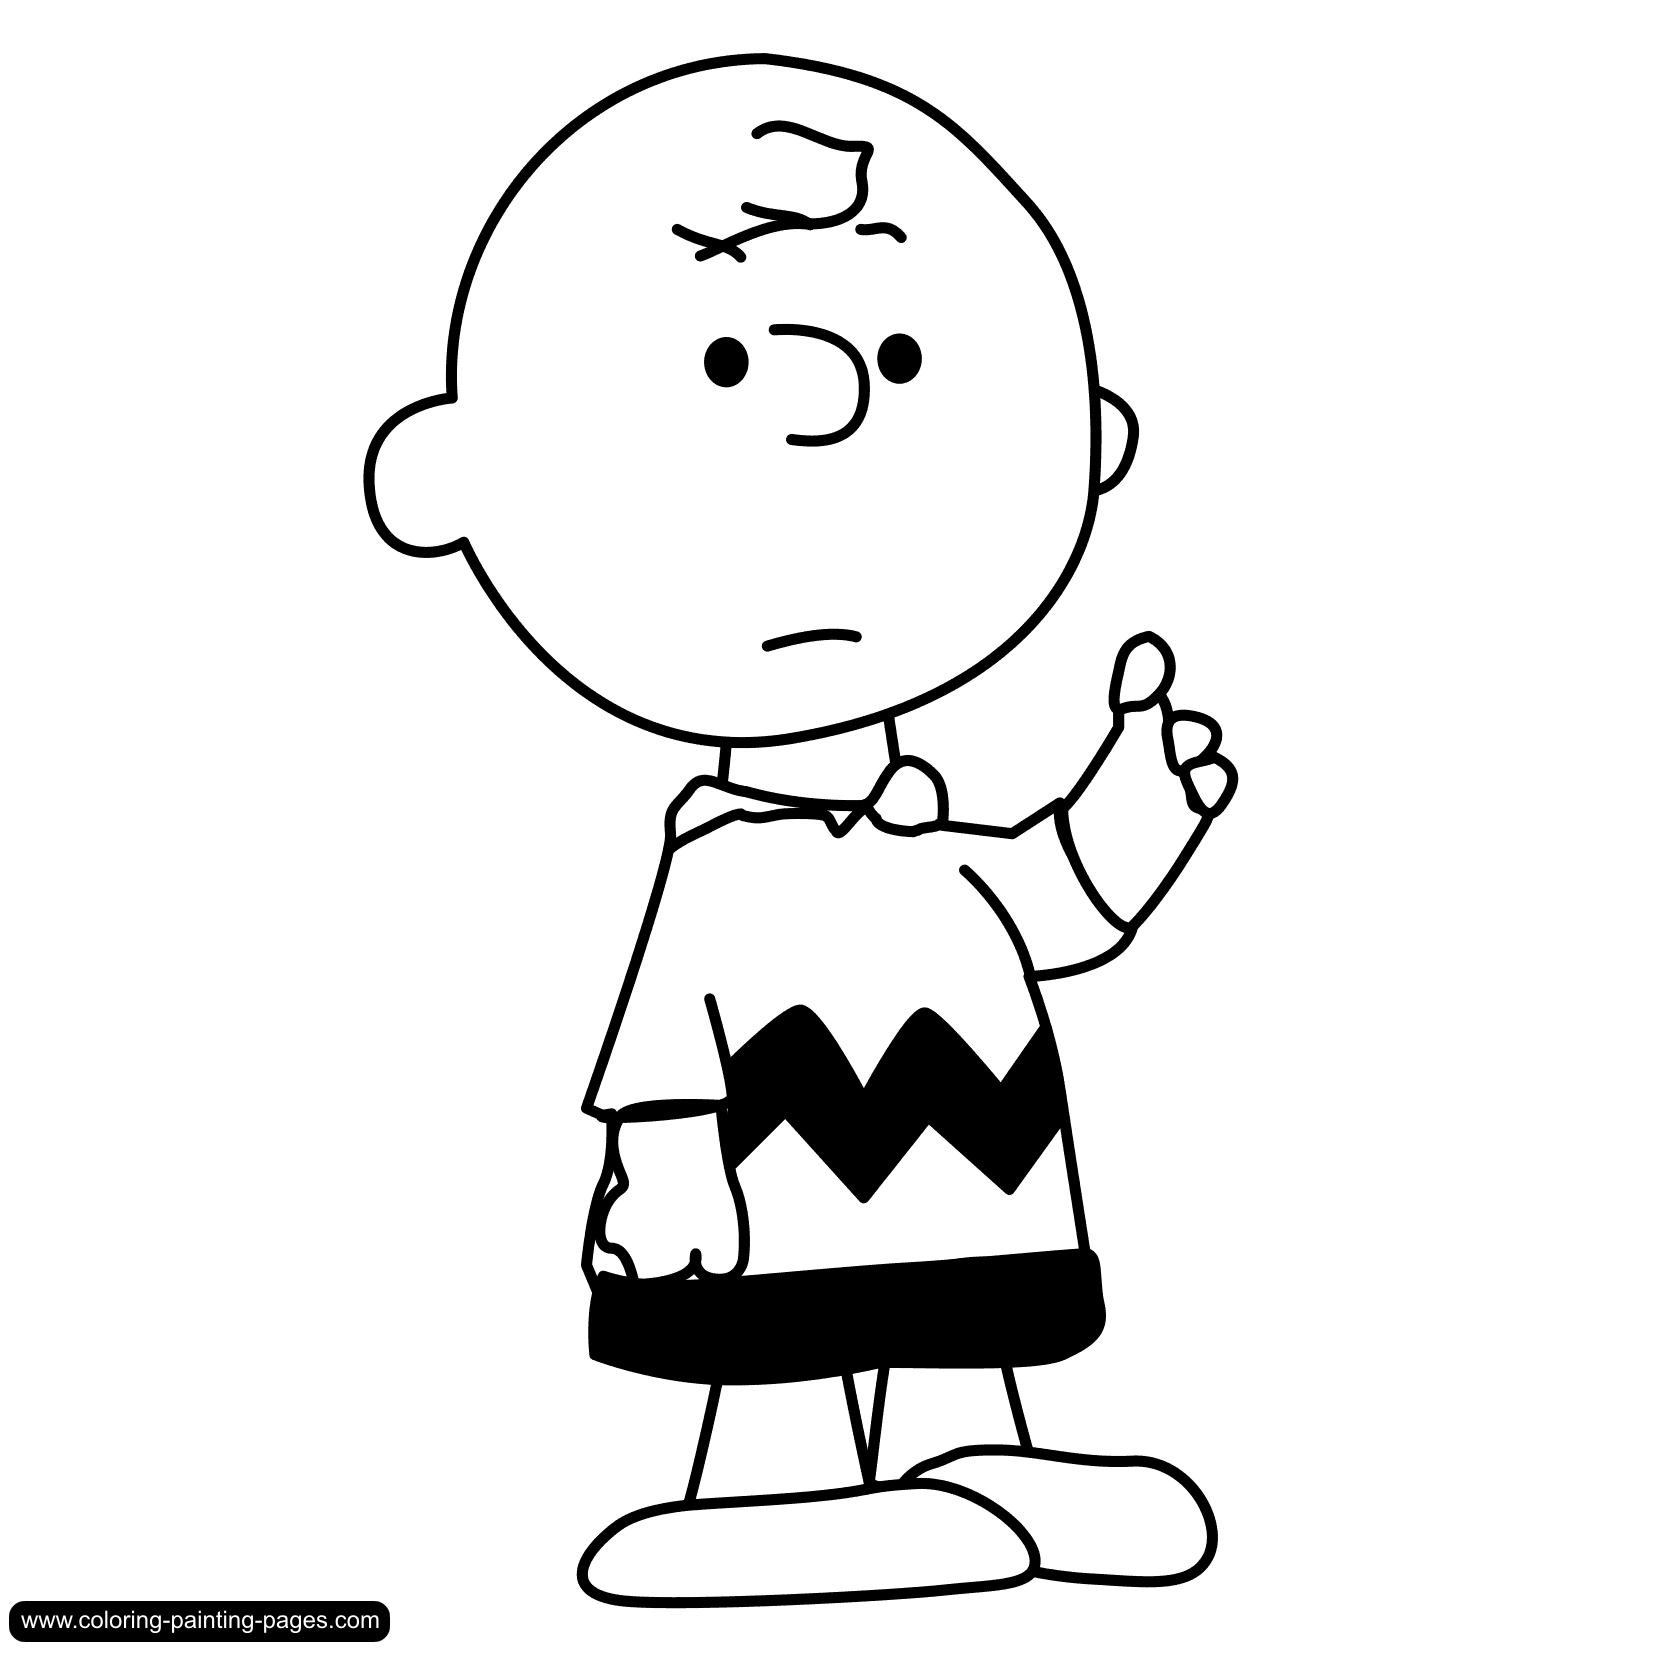 Clip art: Charlie Brown winte